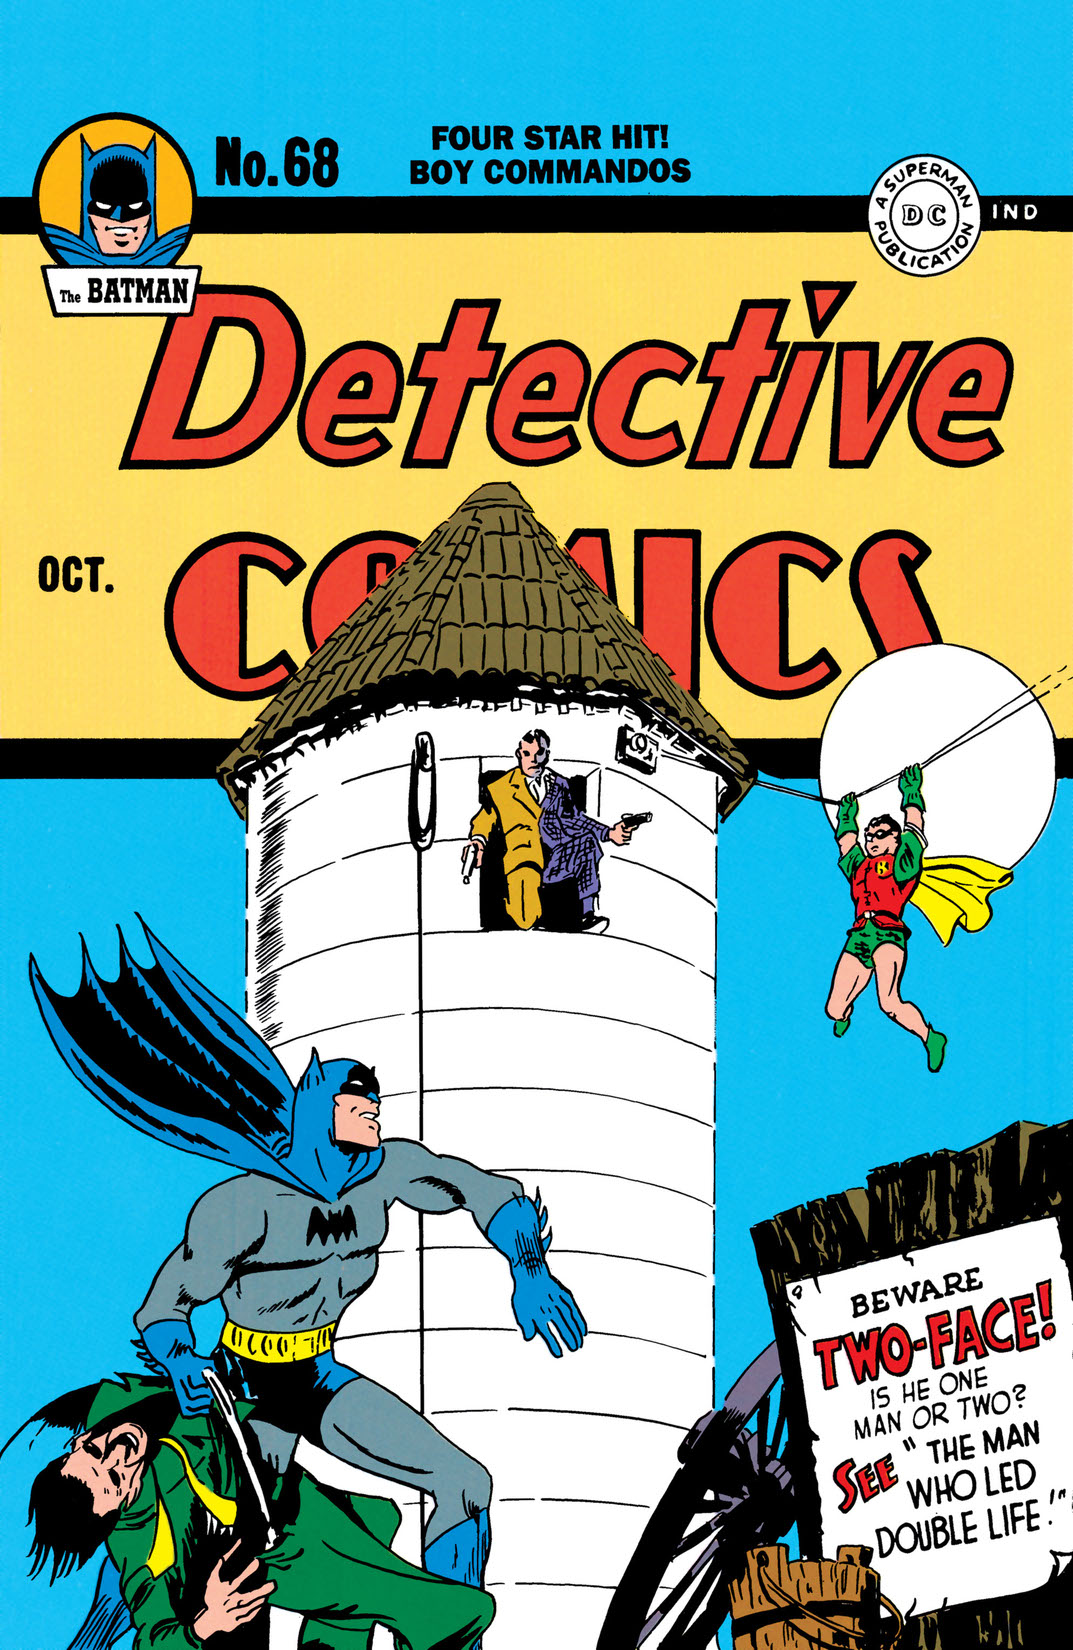 Detective Comics (1942-) #68 preview images